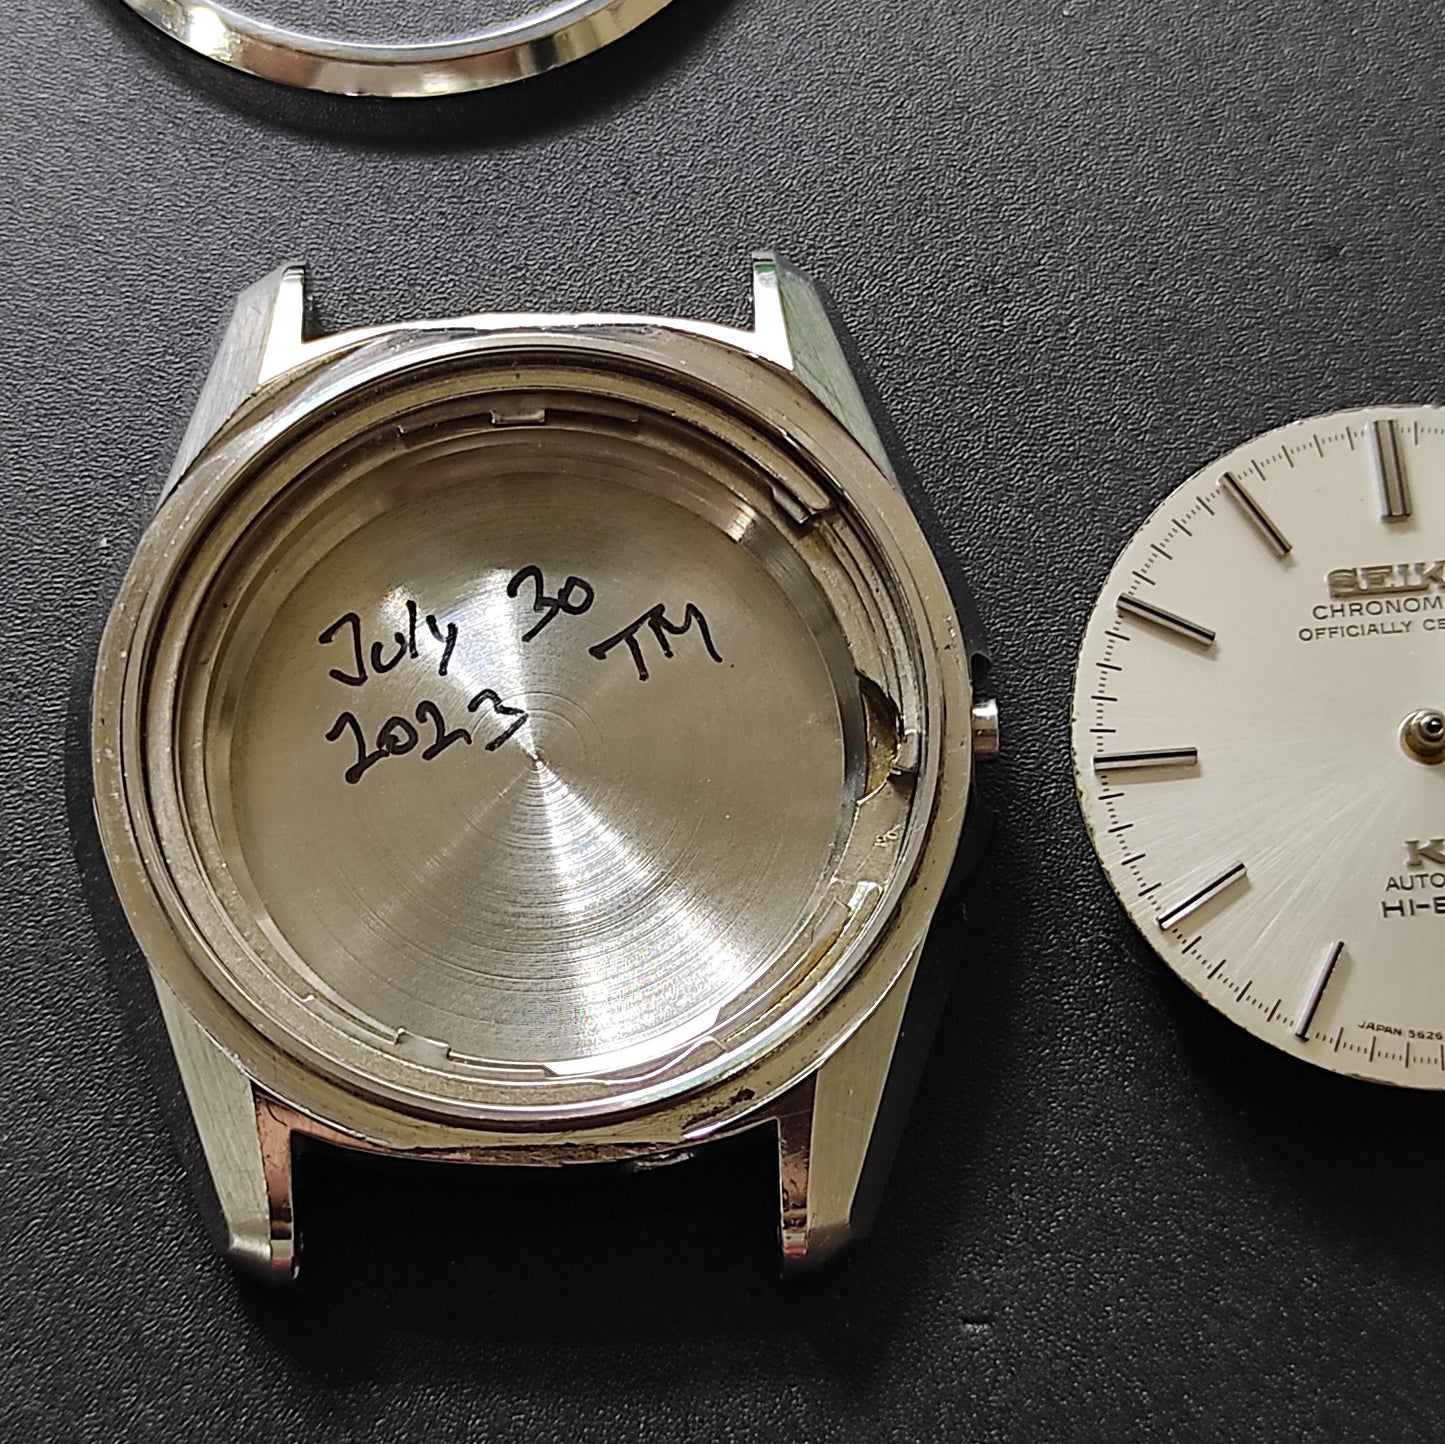 1969 Seiko KS Chronometer Officialy Certified 5626-7040